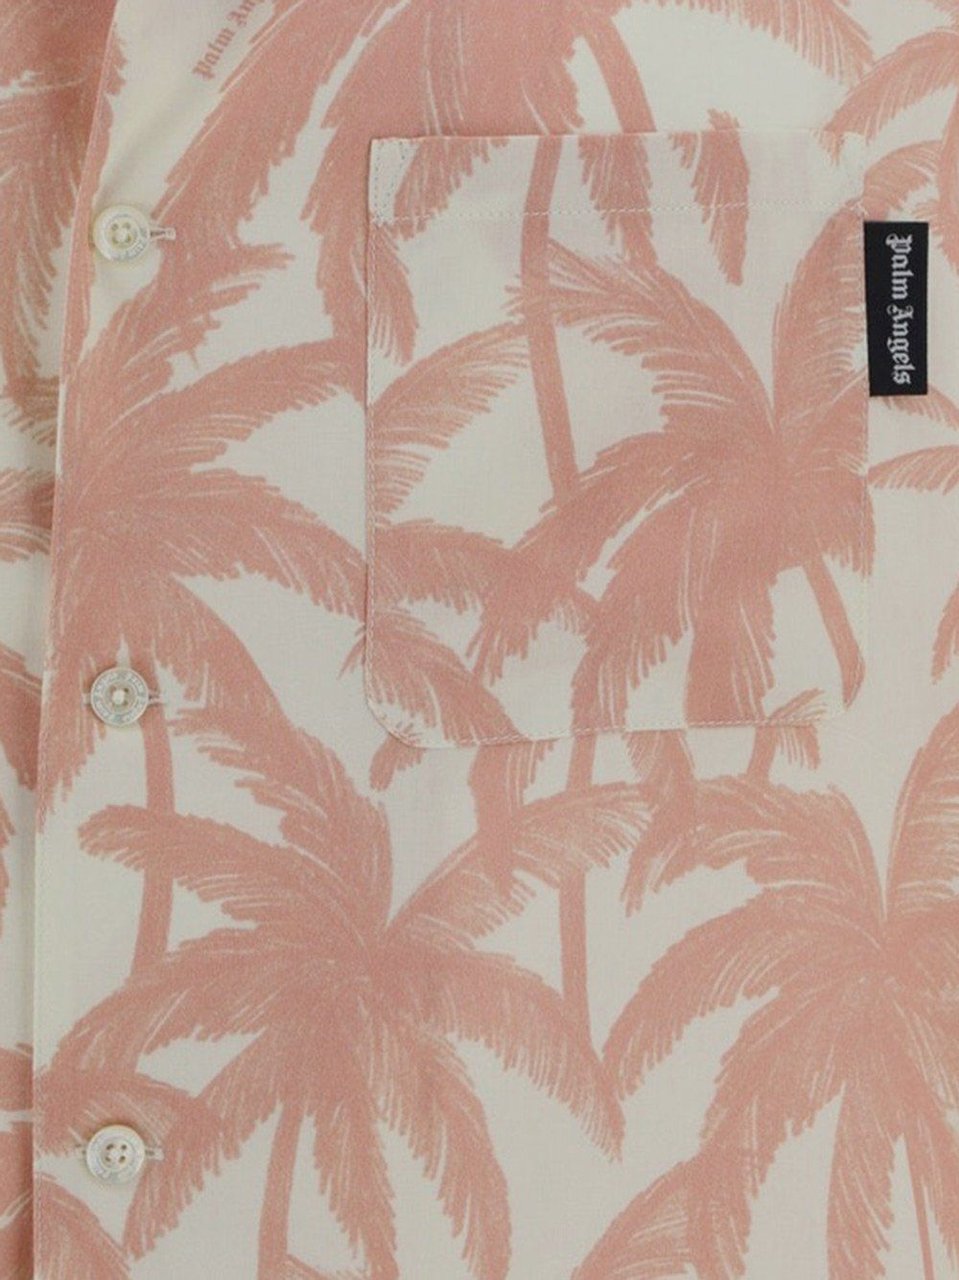 Palm Angels Palms Allover Shirt Roze